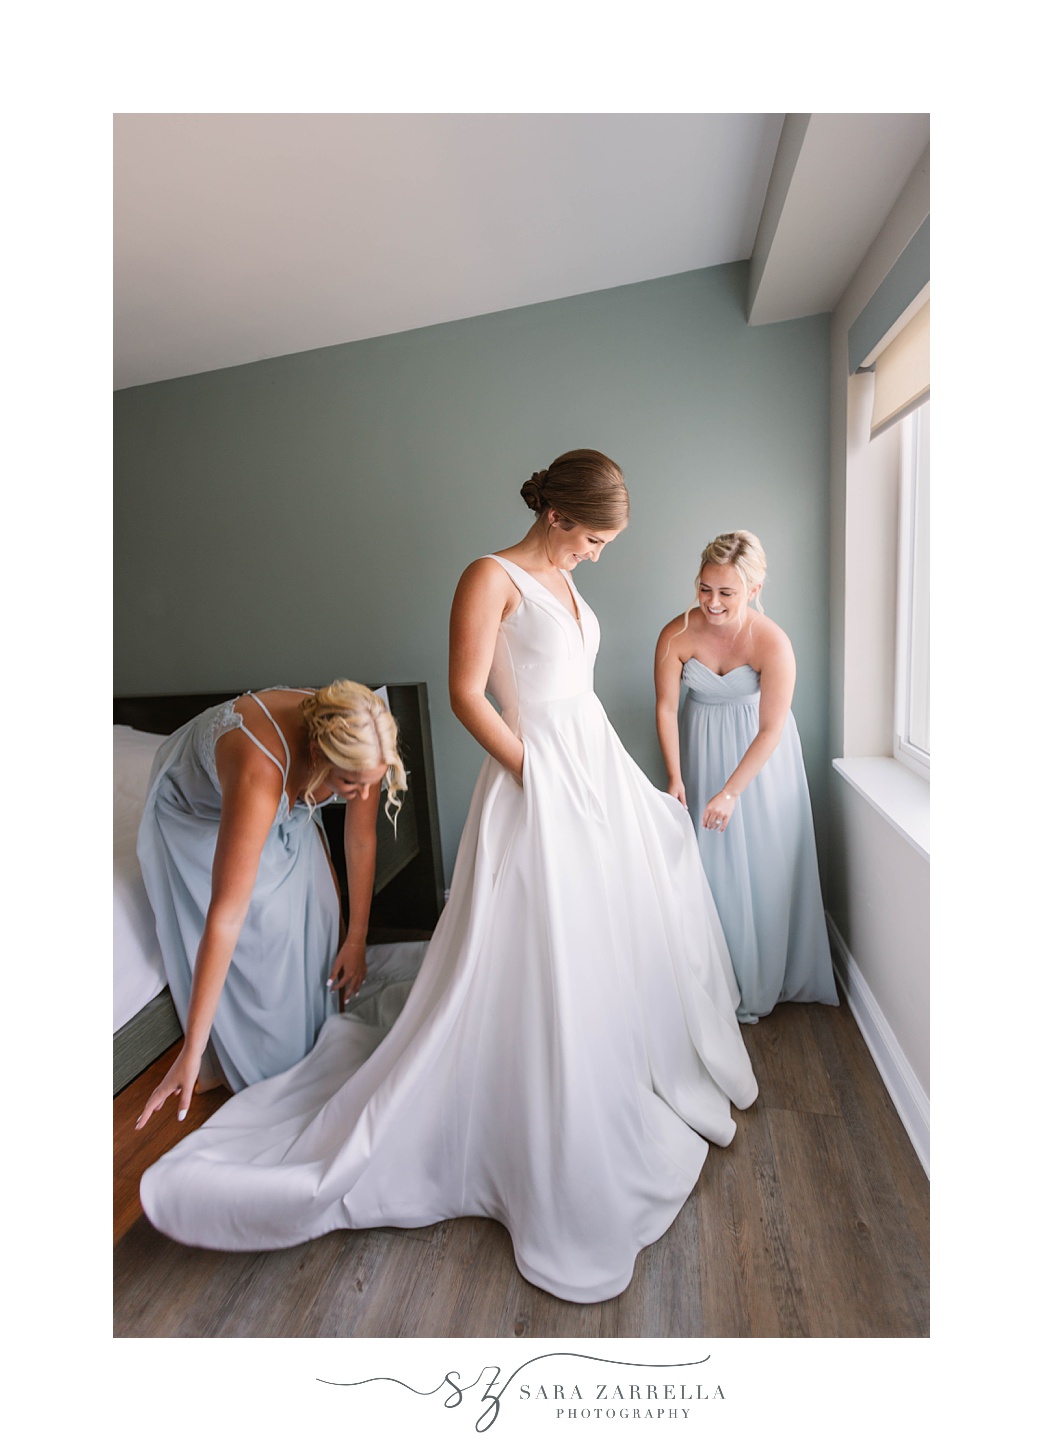 bridesmaids help bride with gown during Atlantic Resort at Wyndham Newport wedding day prep